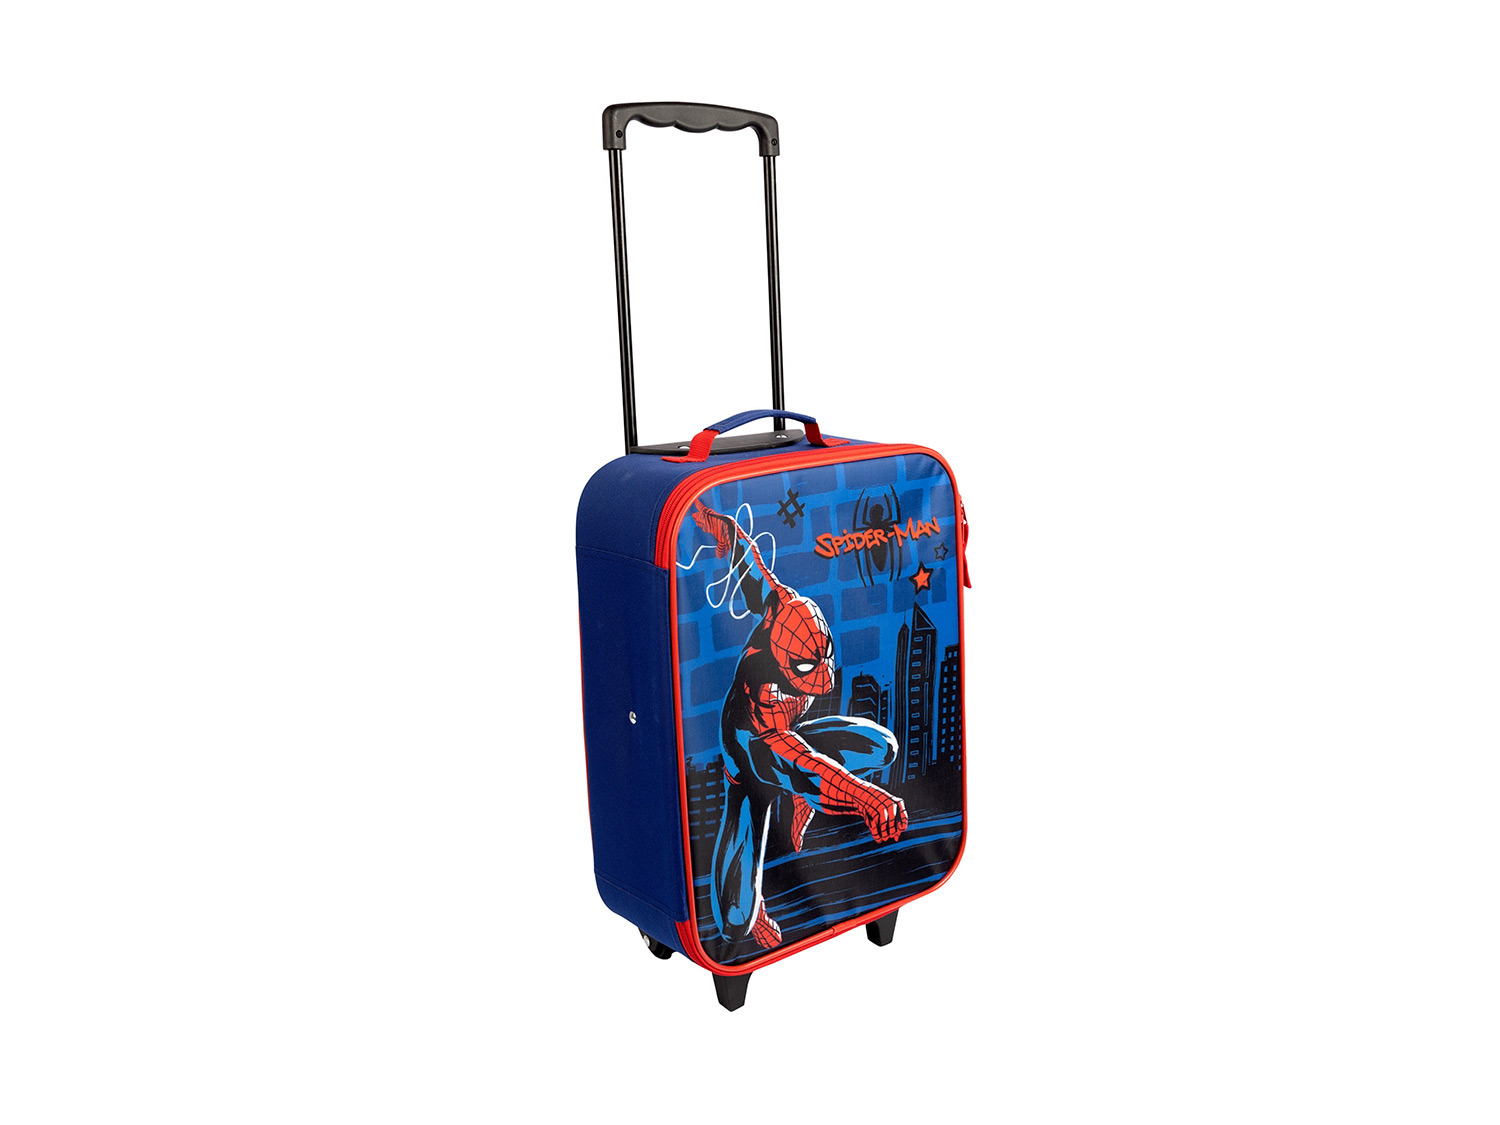 Undercover Kinder-Trolley Spiderman, LIDL Koffer 